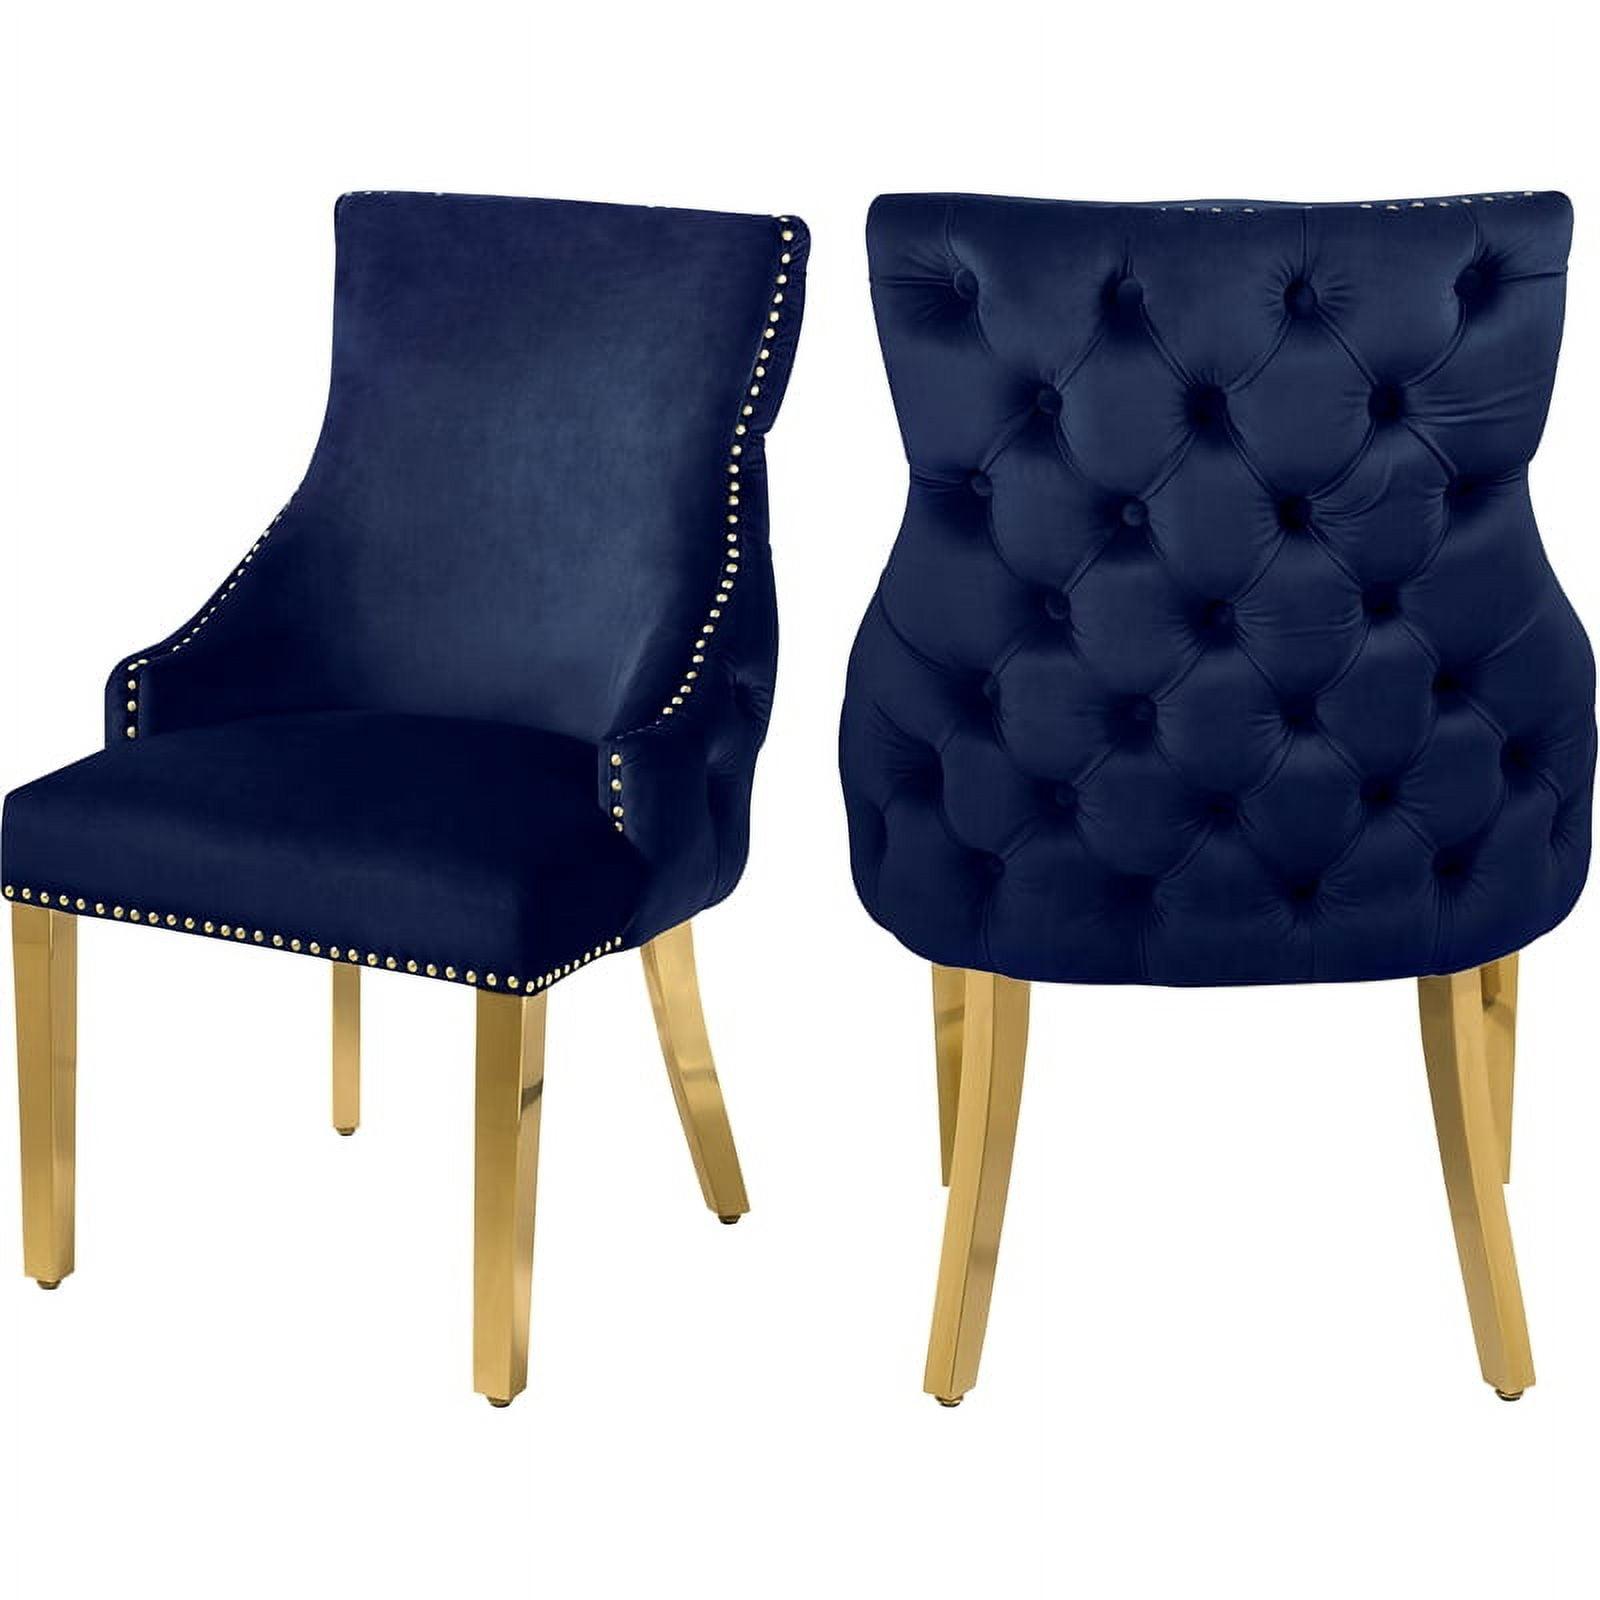 Navy Velvet Upholstered Dining Chair with Gold Metal Legs, Set of 2